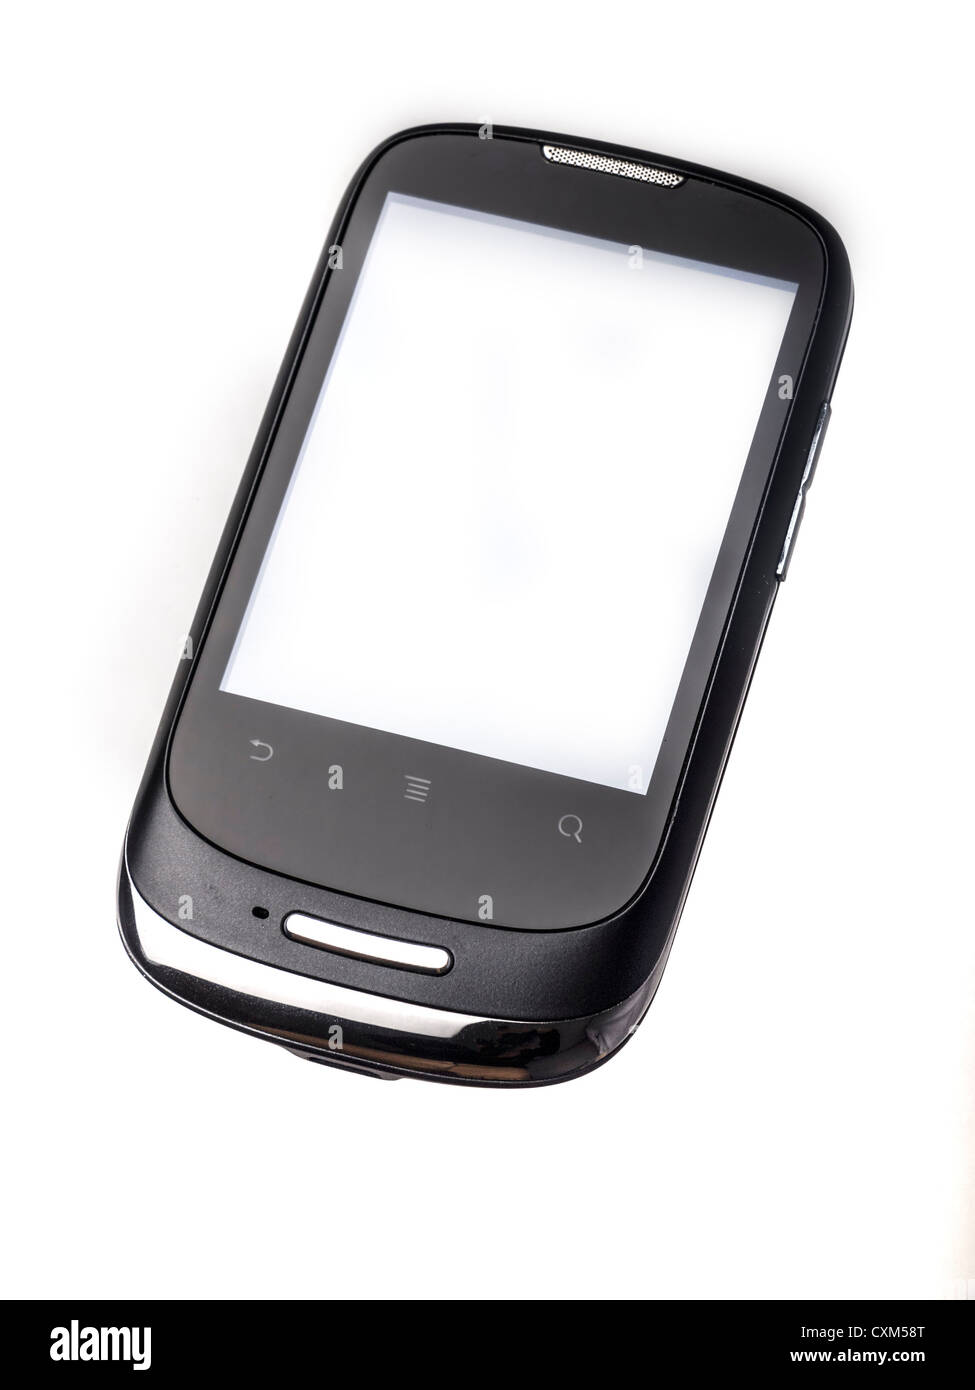 Huawei X1 U8180 per smartphone Android isolati su sfondo bianco Foto Stock